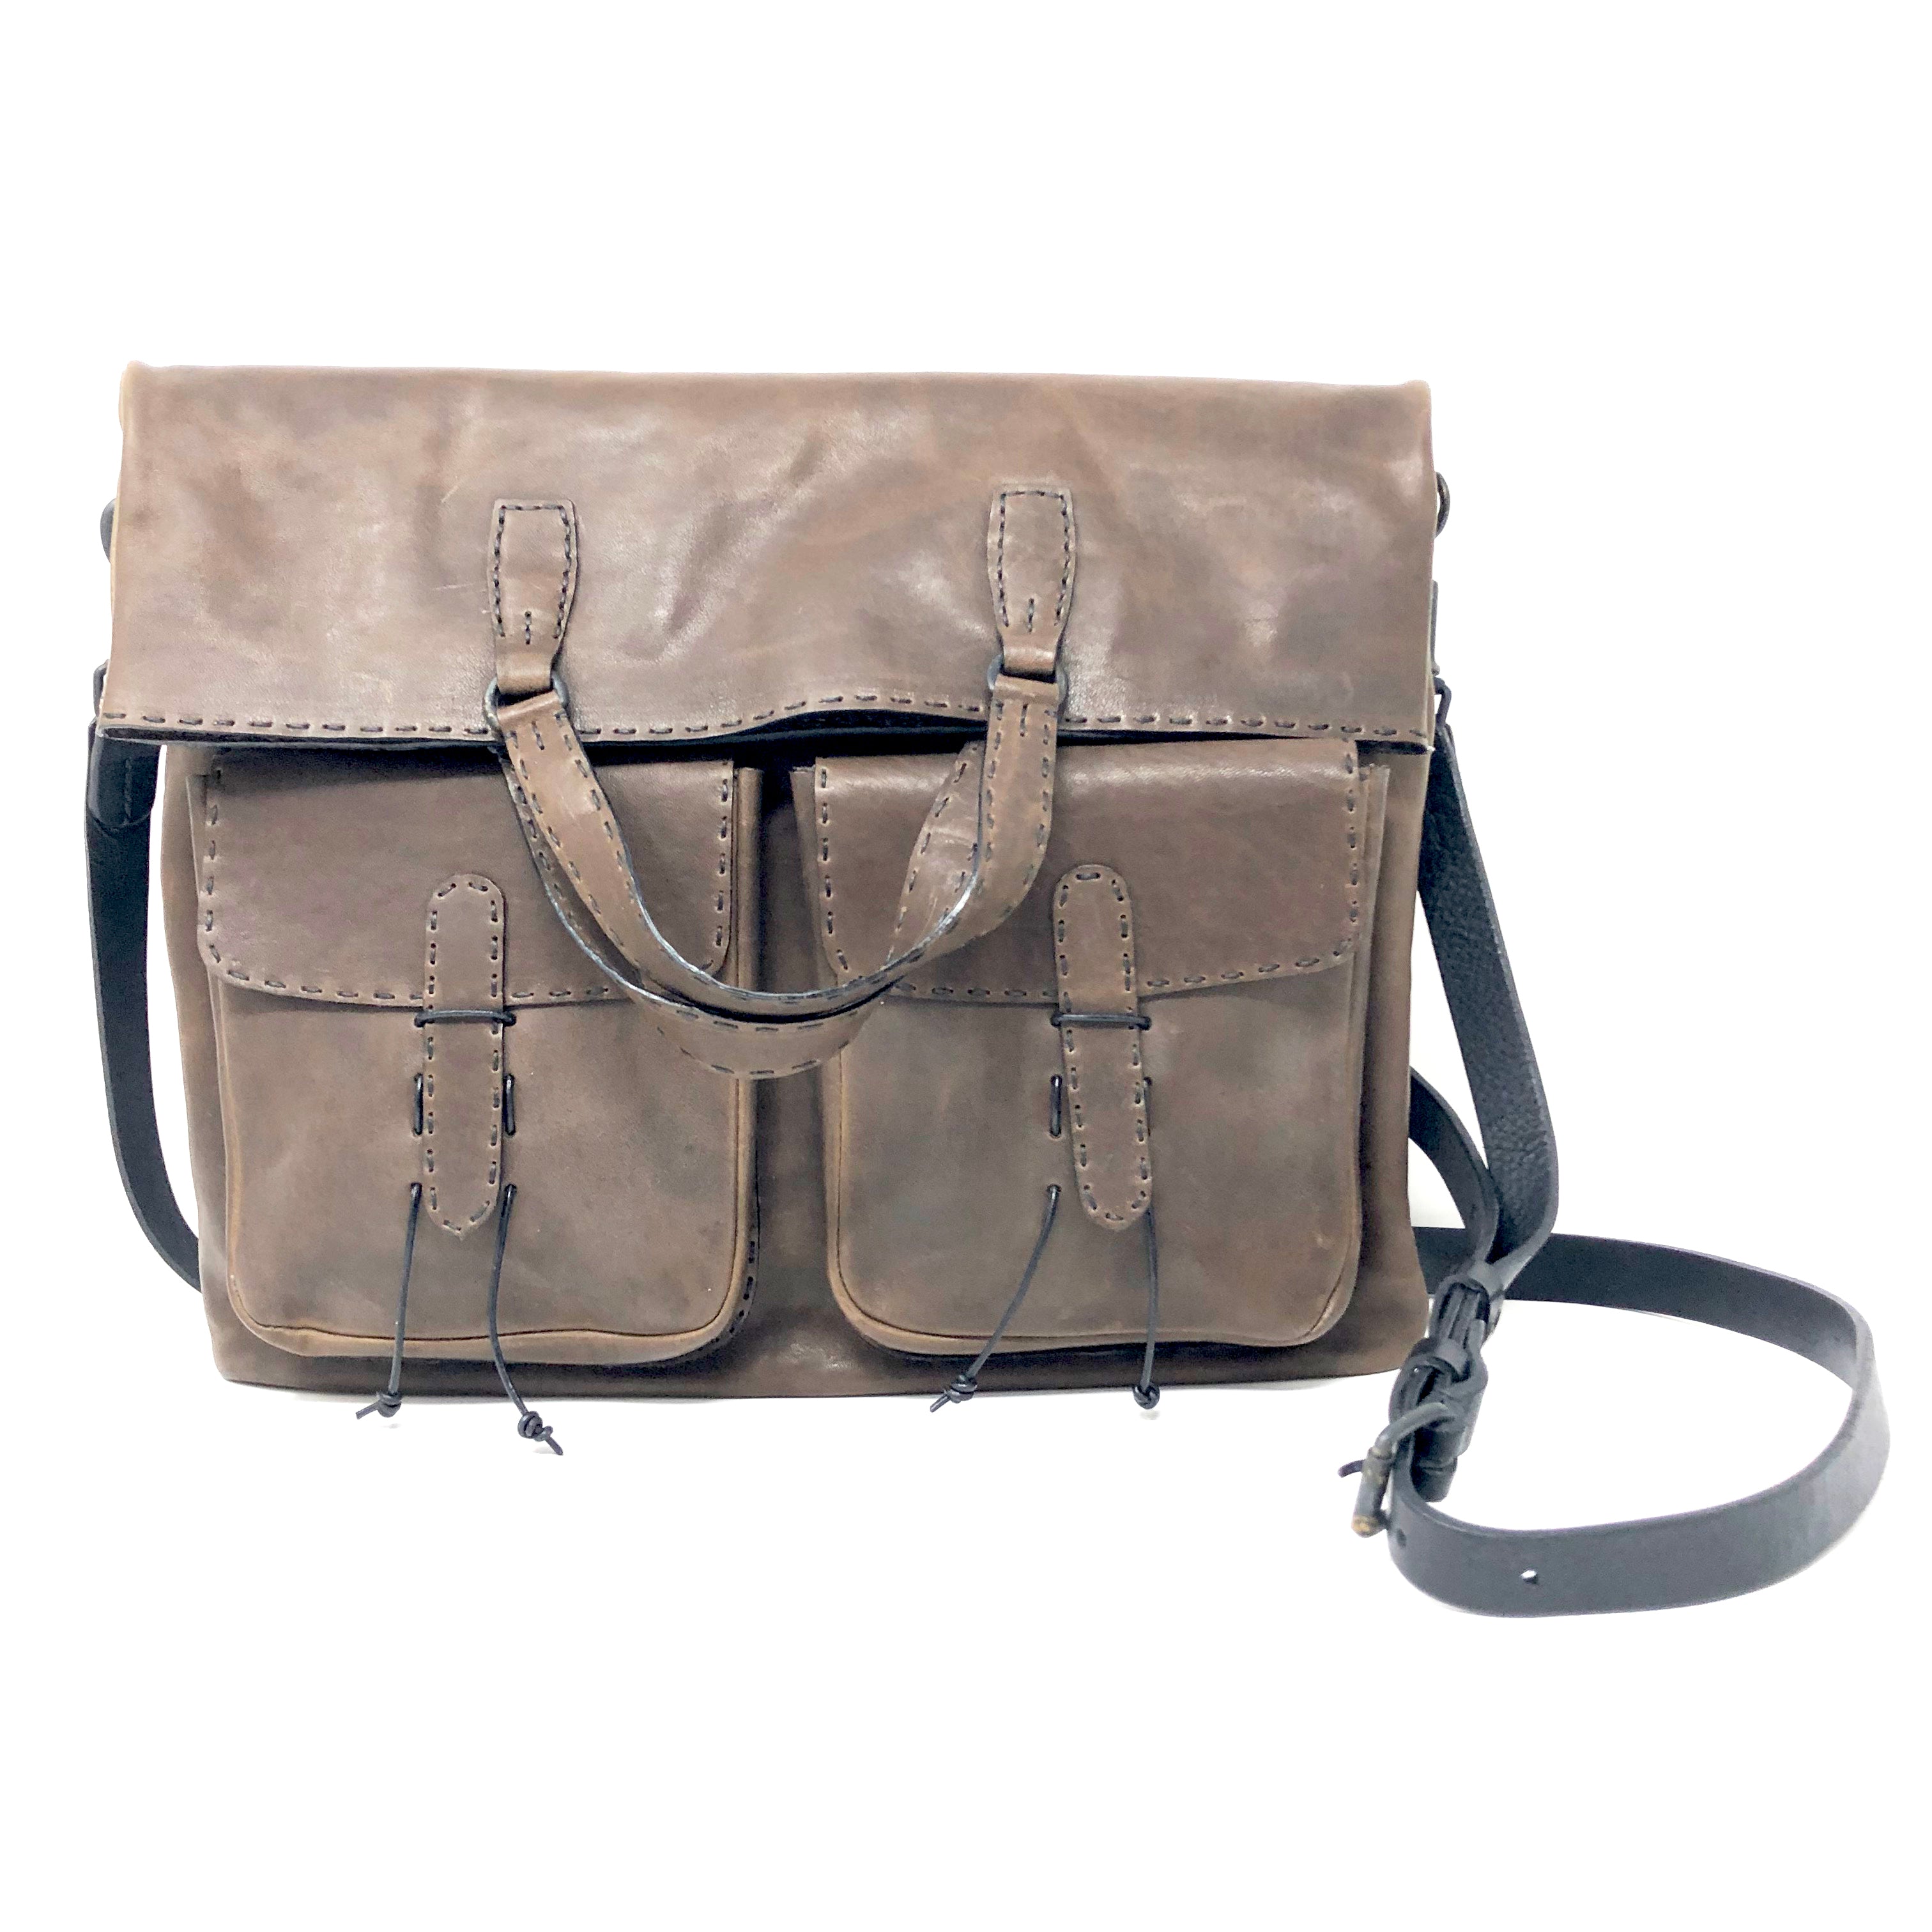 Malta Leather Bag